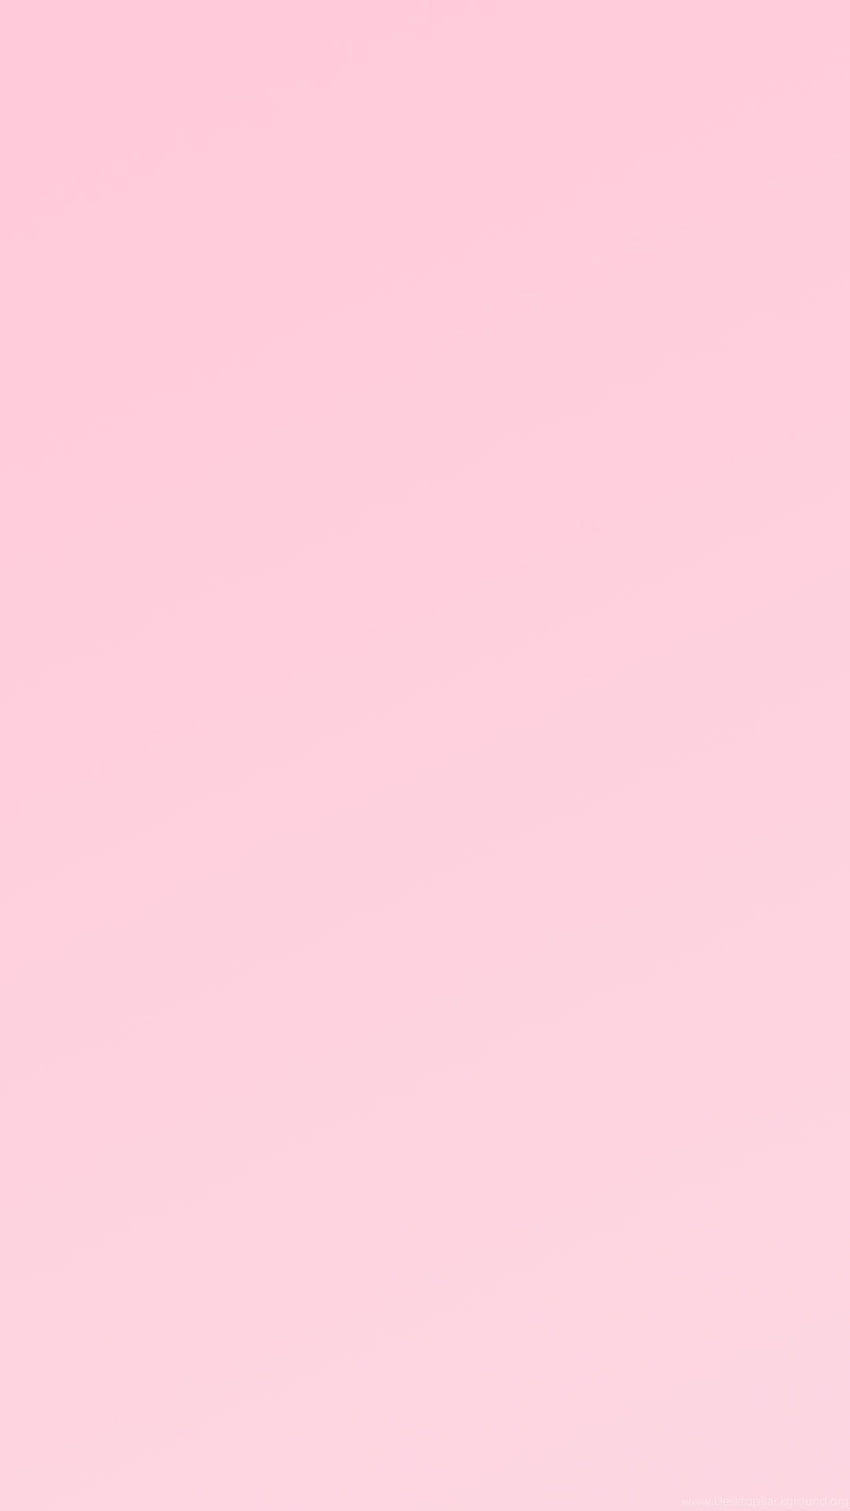 Plain Pink iPhone 5 6 / IPod Background HD phone wallpaper